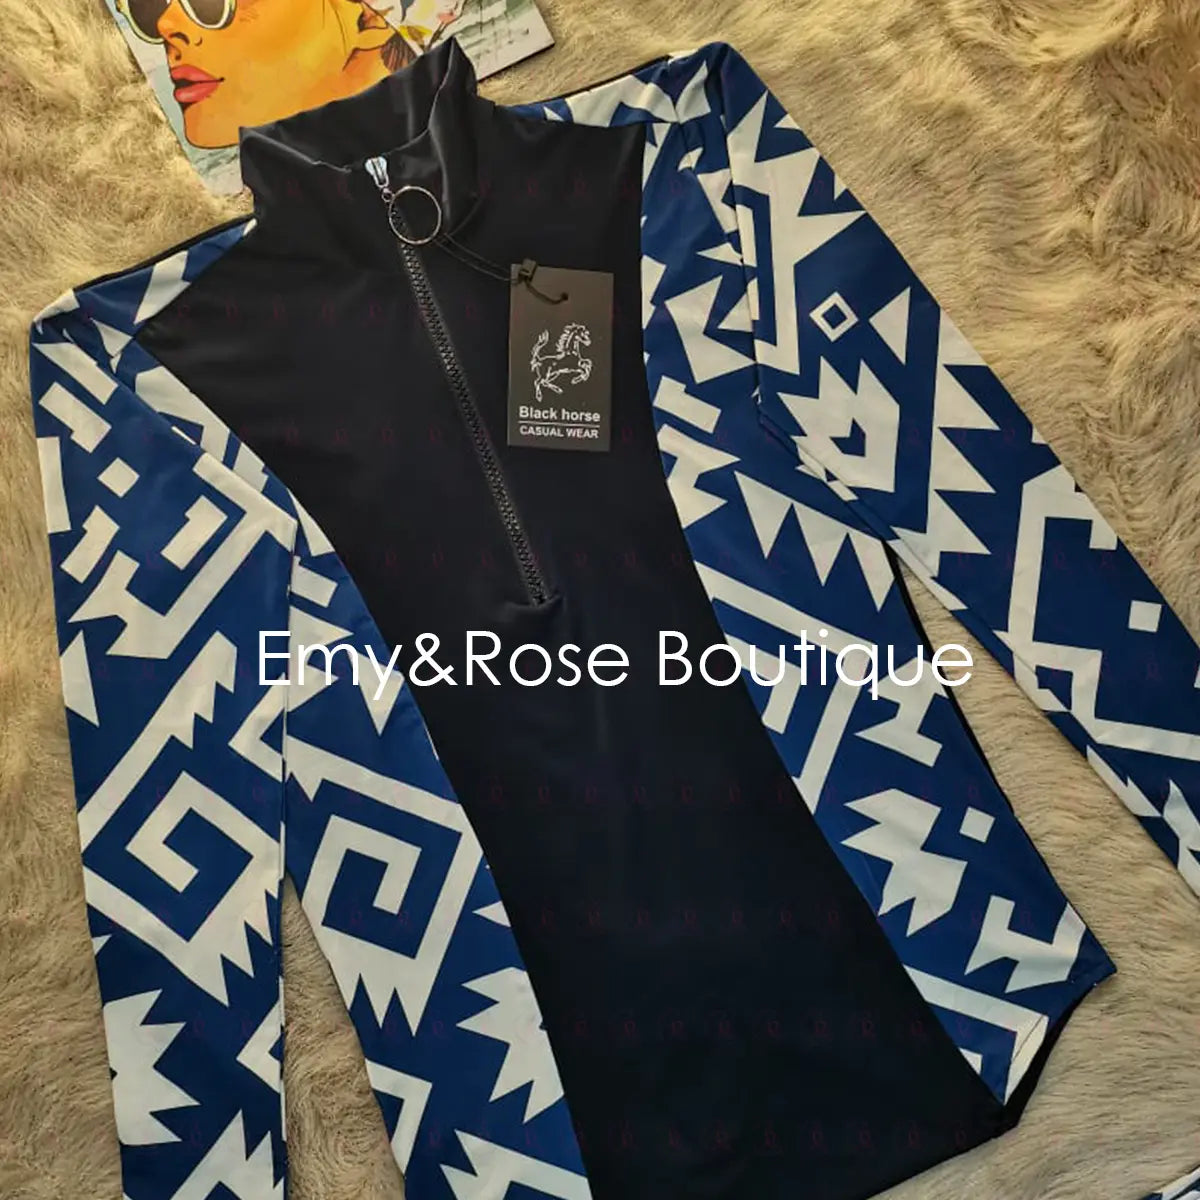 Artic Swimsuit - EMY & ROSE Boutique 